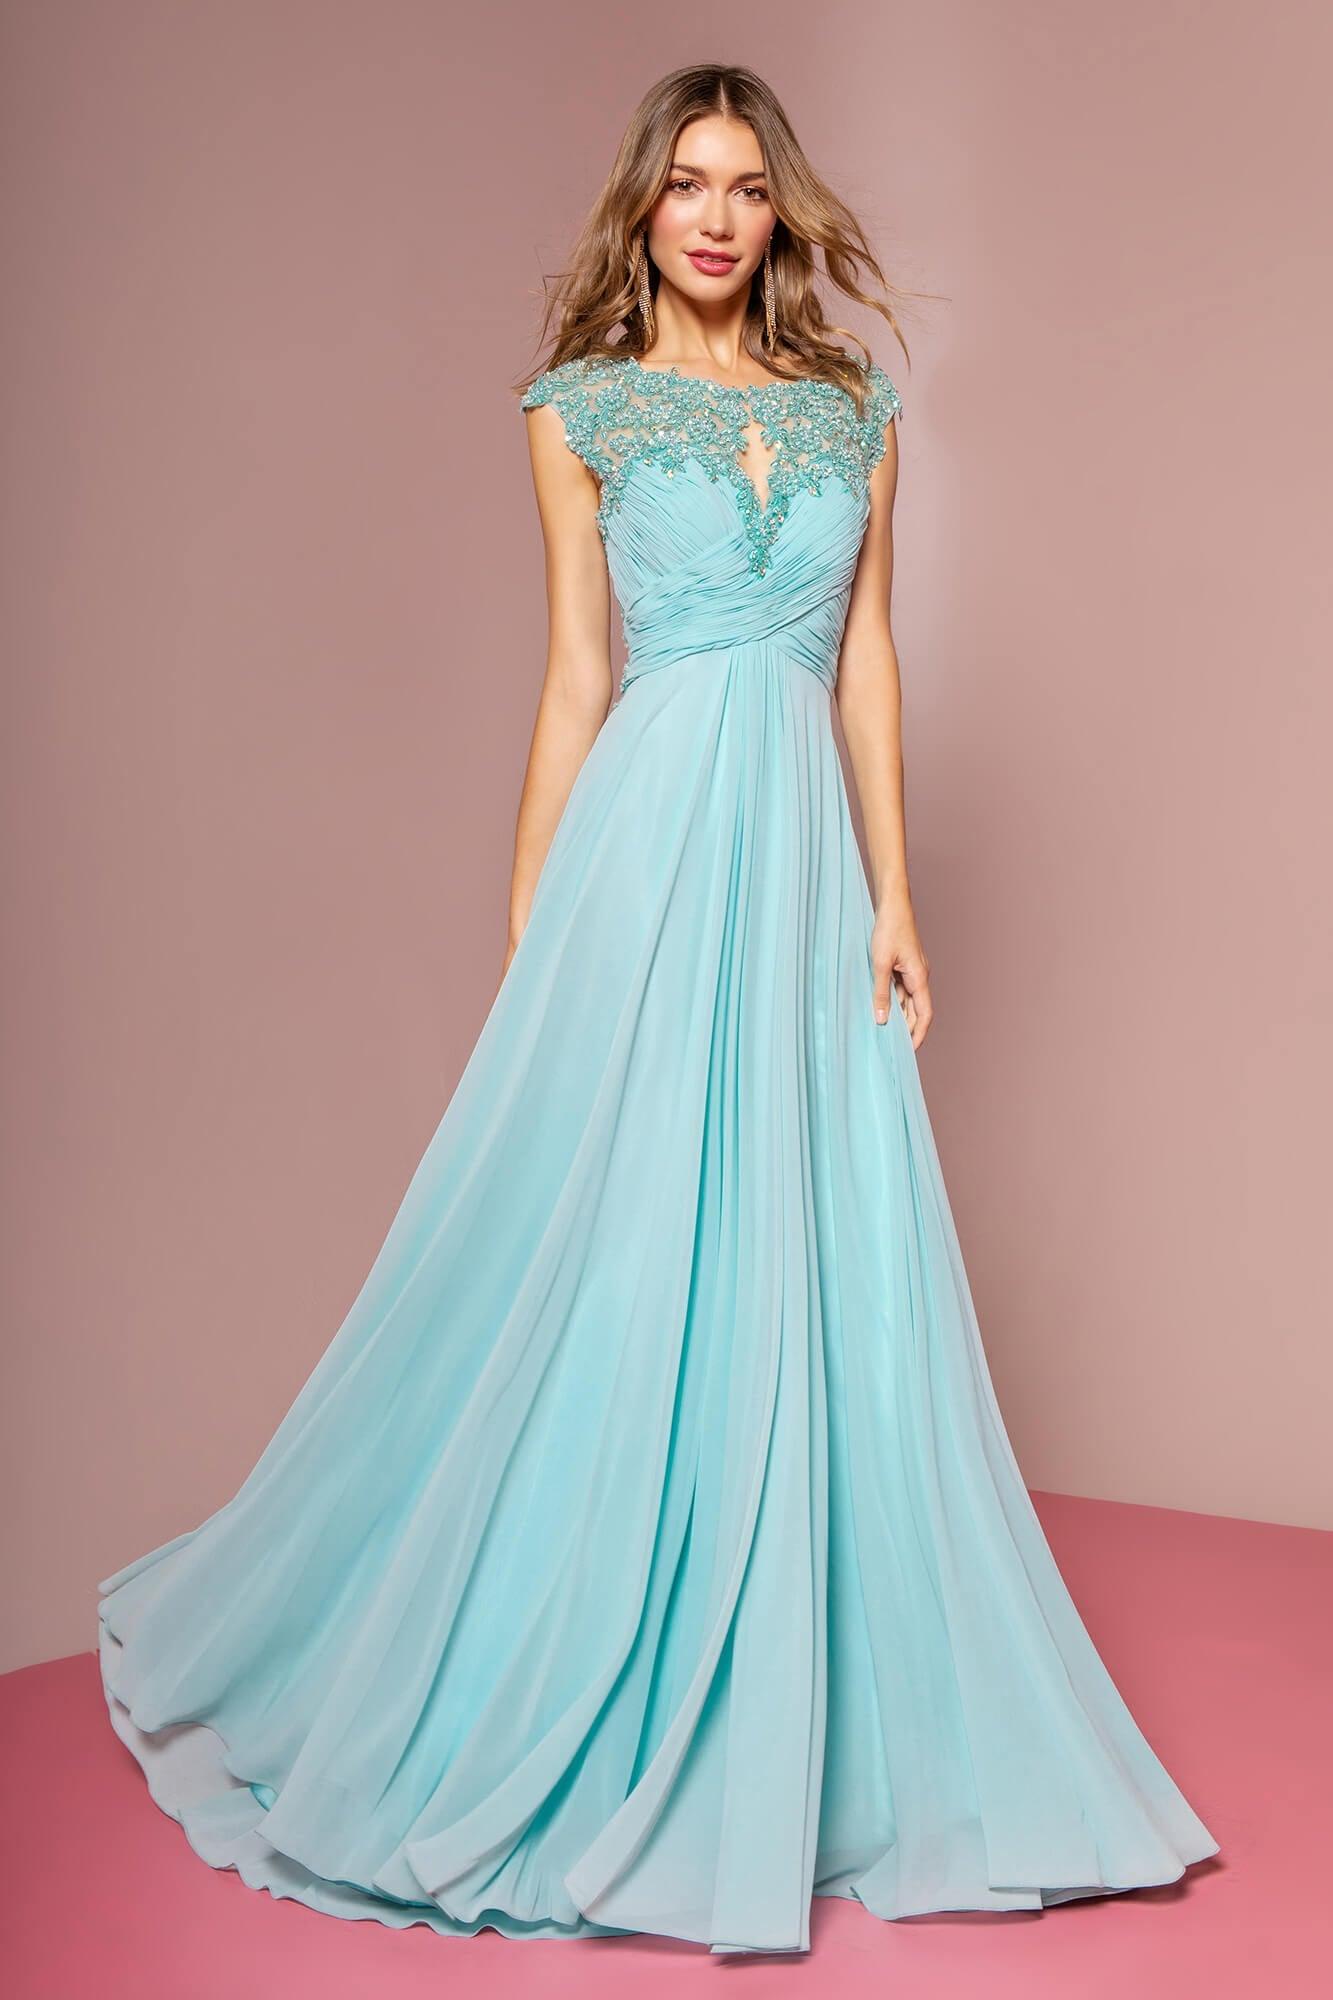 Long Formal Cap Sleeve Ruched Bodice Prom Dress - The Dress Outlet Elizabeth K